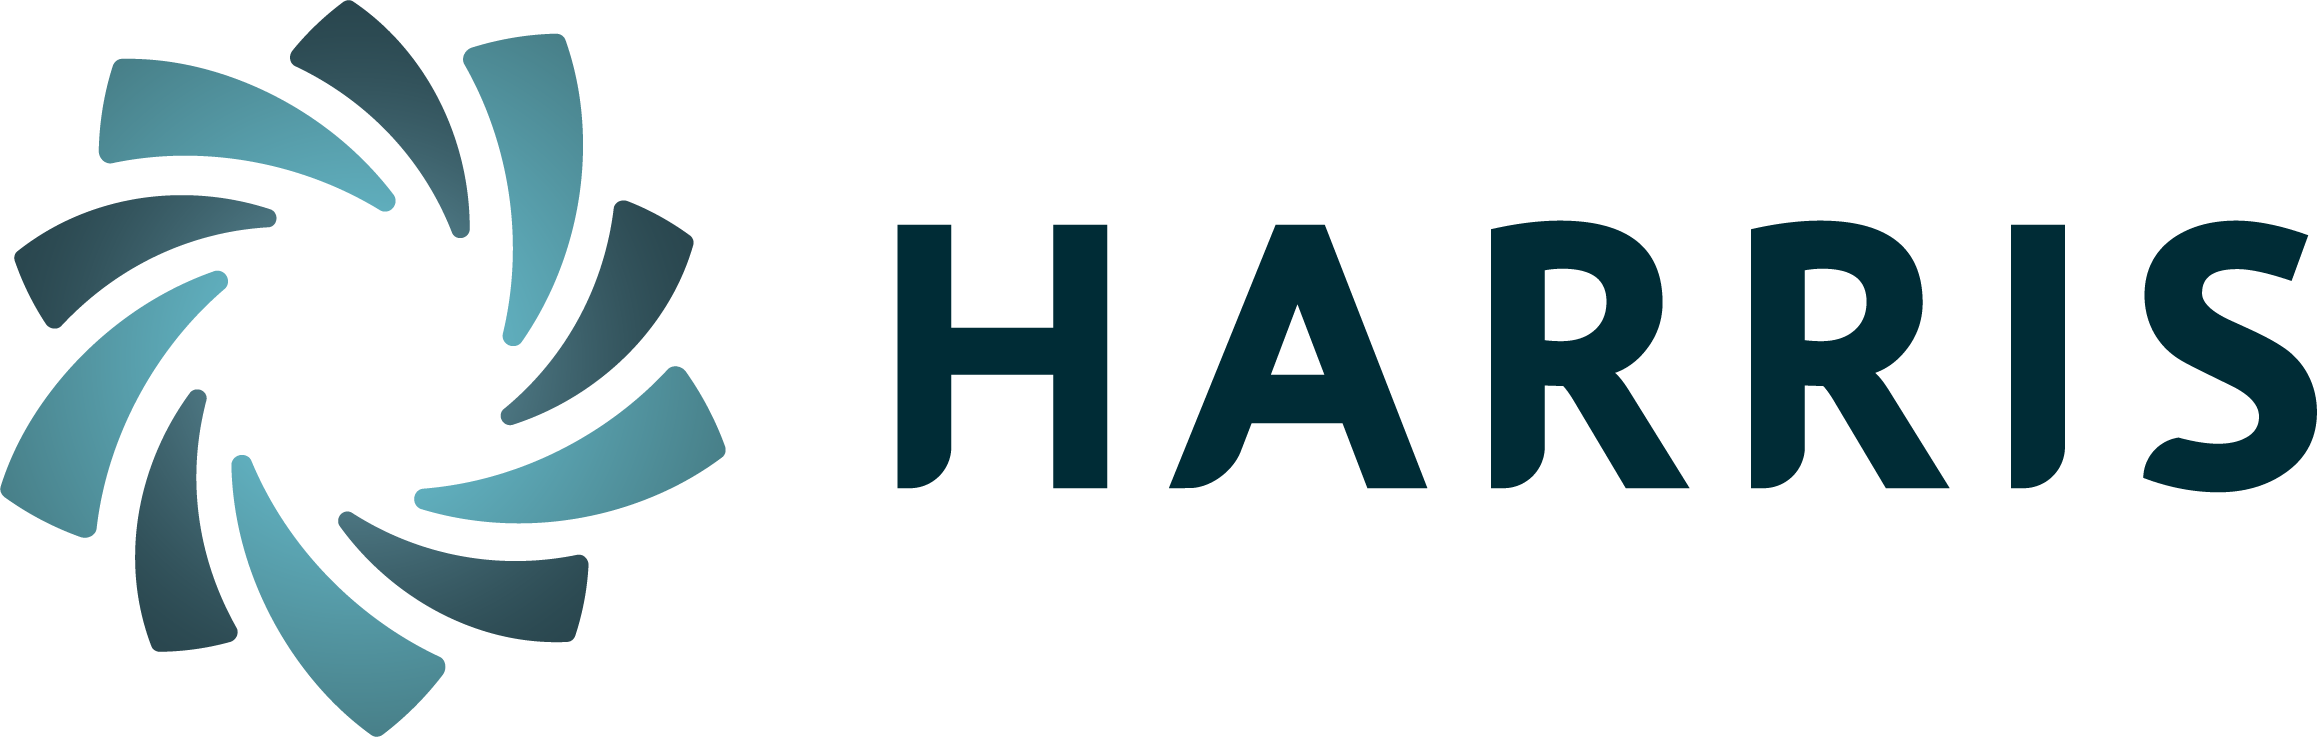 Harris M&A Snapshot - Healthcare